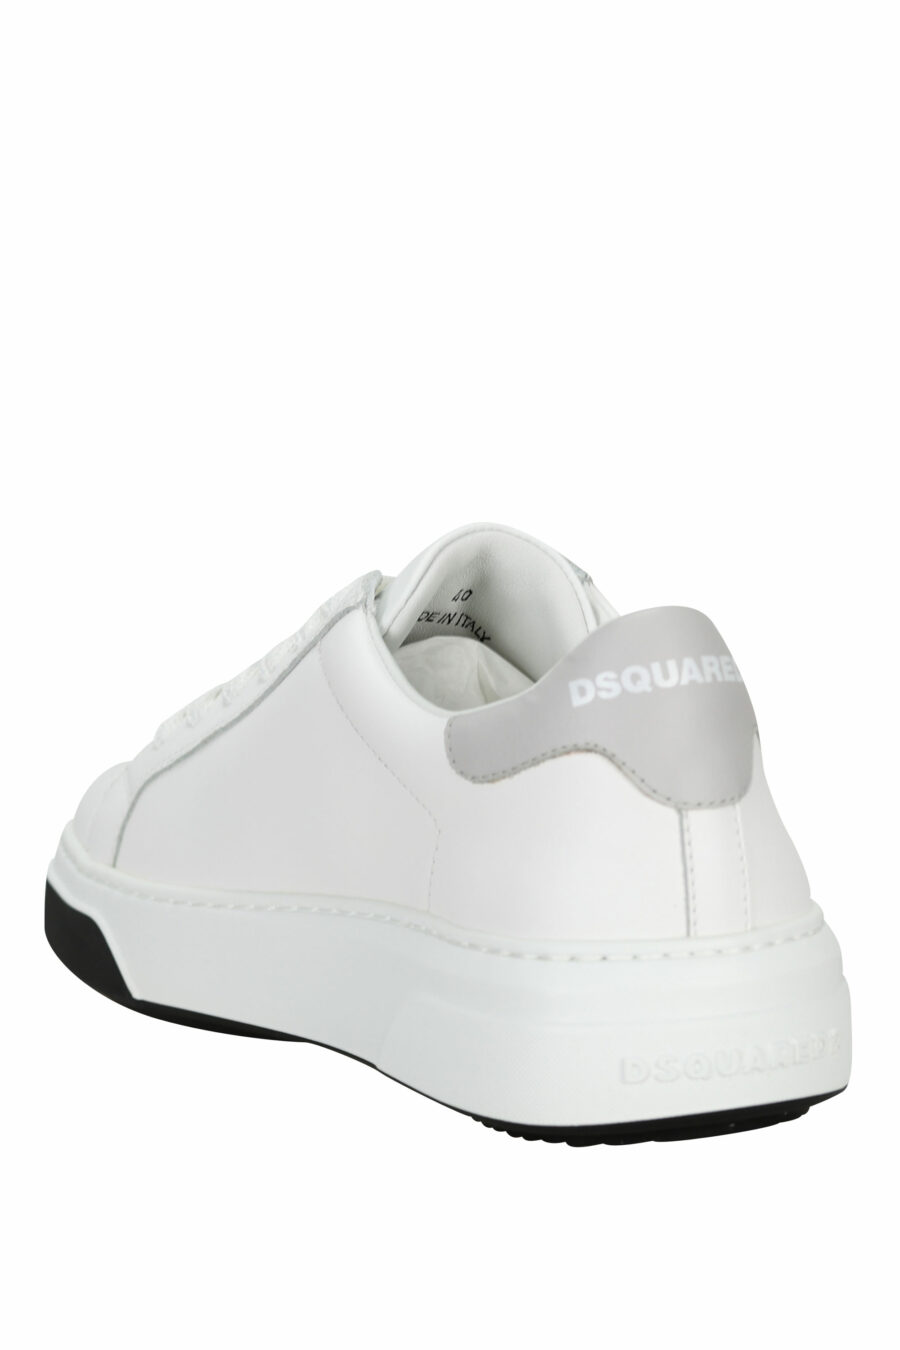 Sapatilhas brancas com mini-logotipo preto e sola bicolor - 805777319321 3